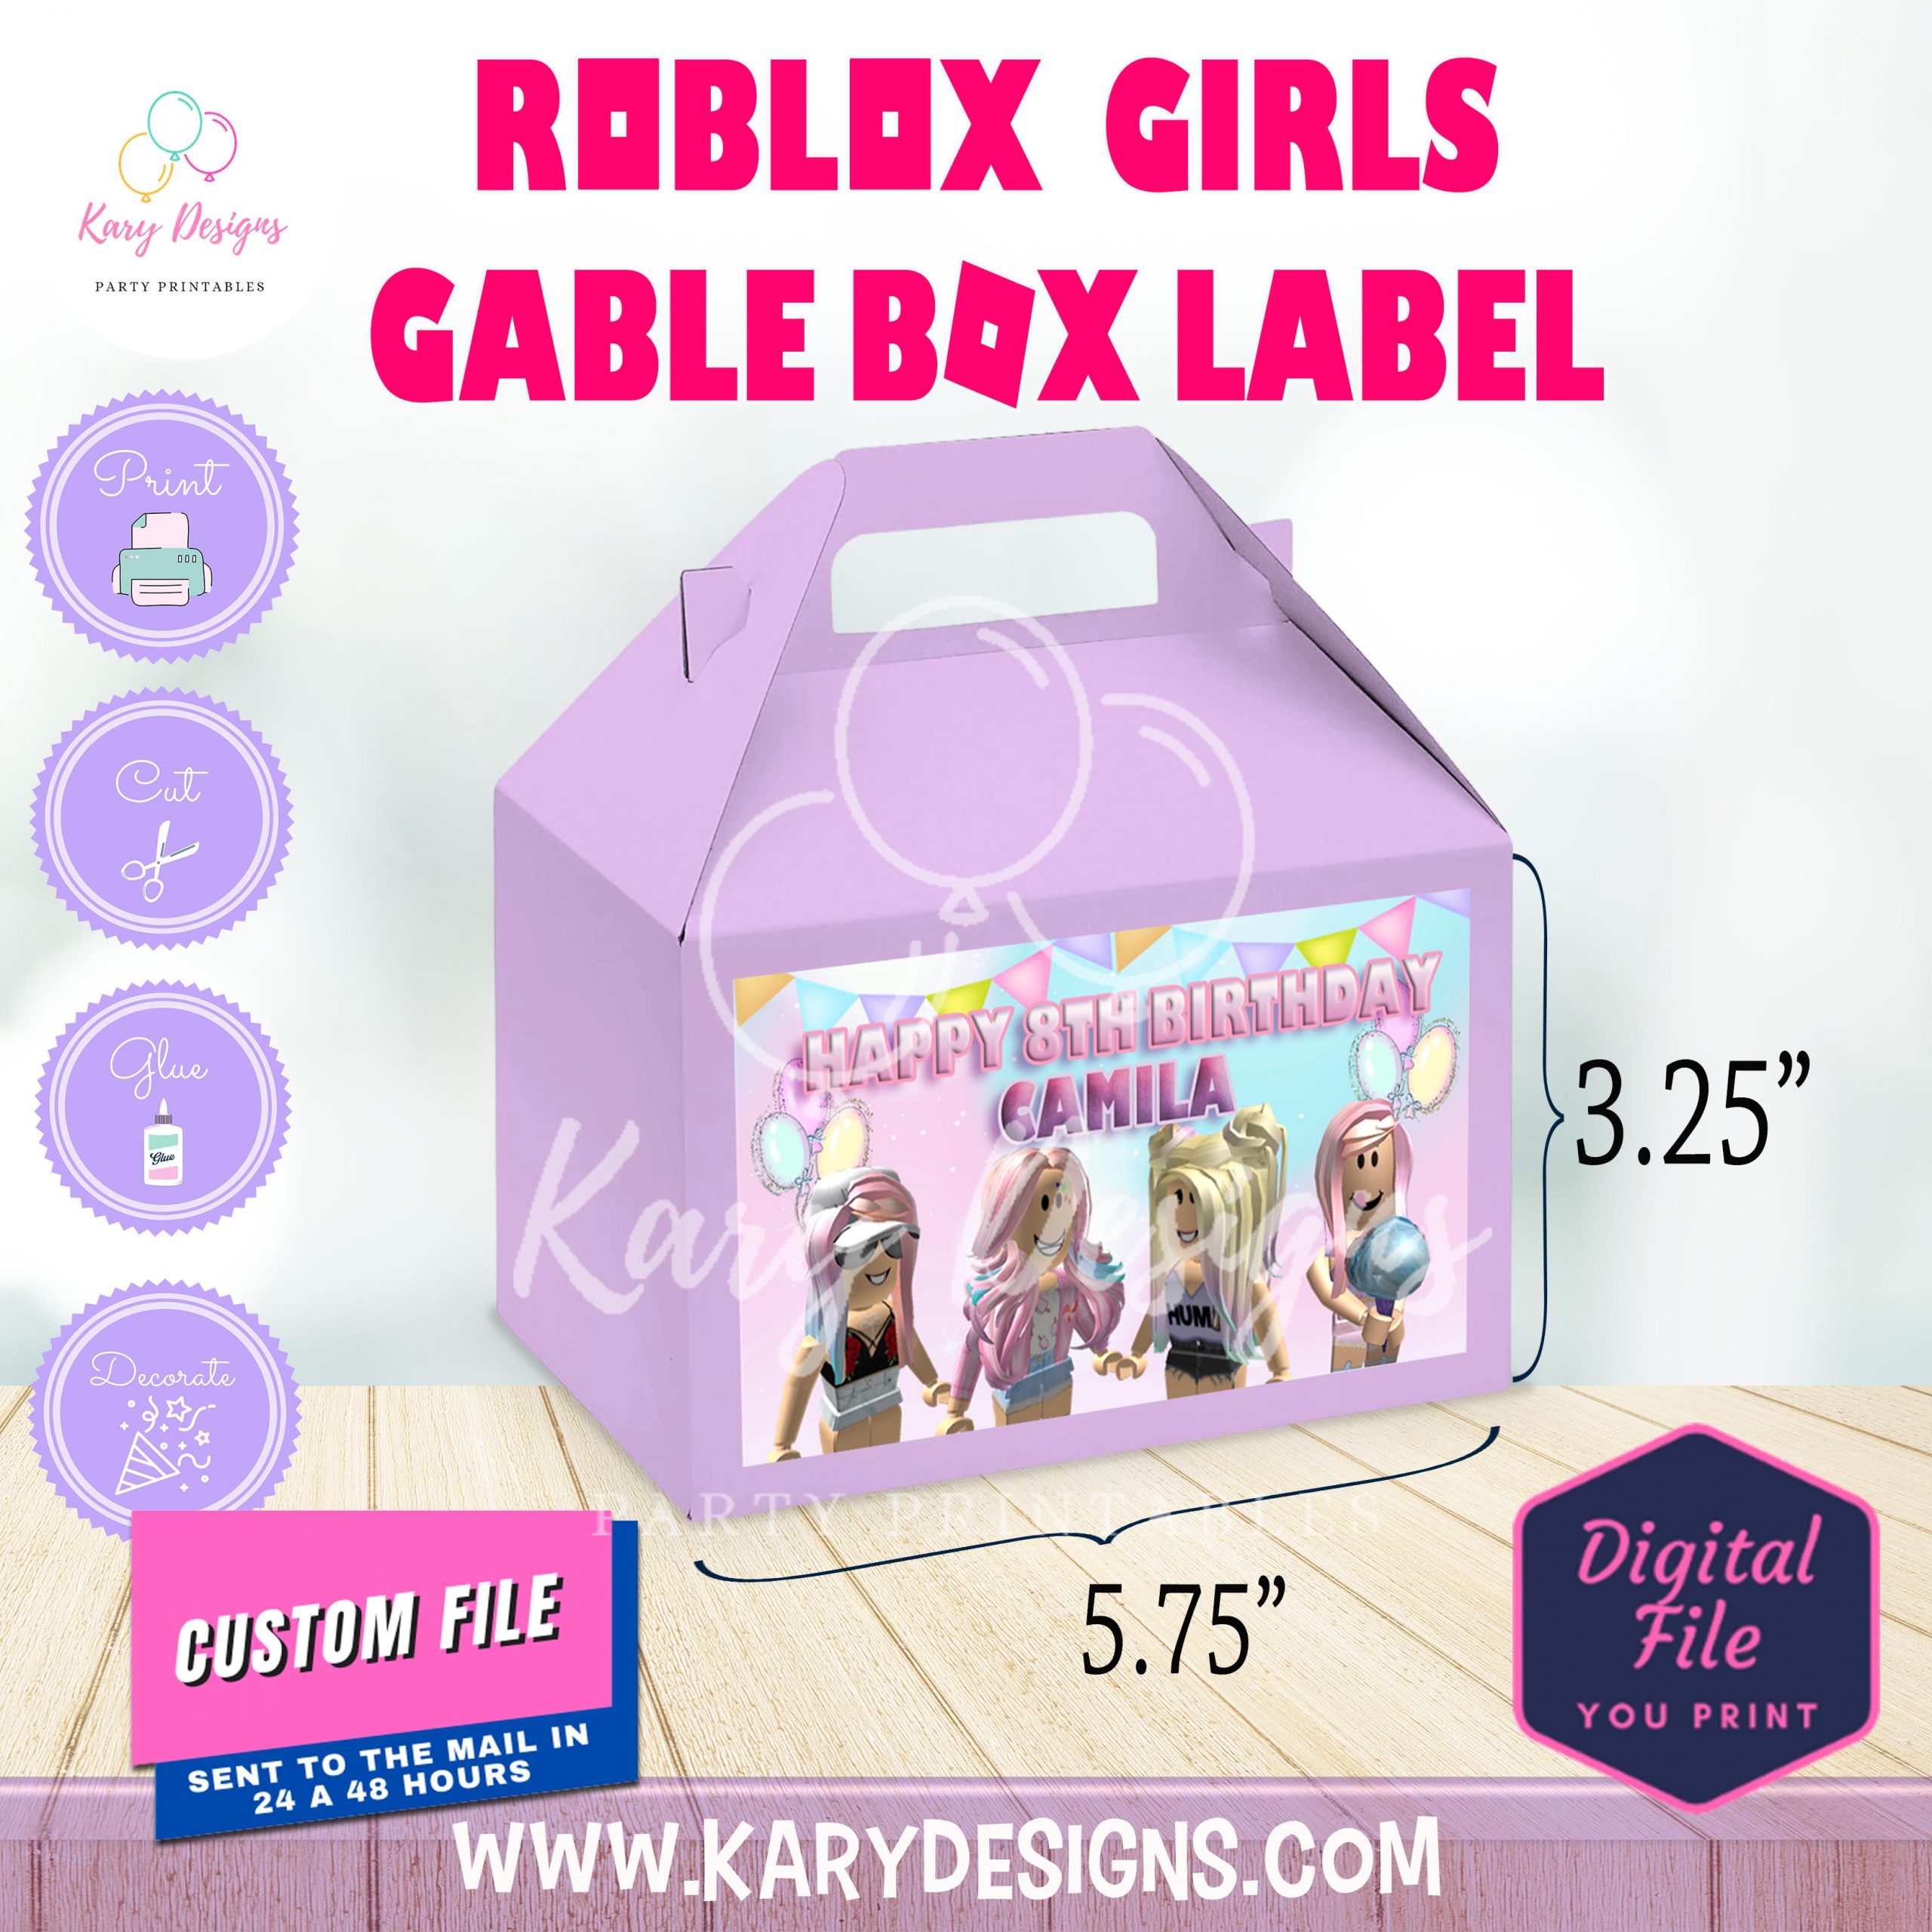 https://karydesigns.com/wp-content/uploads/2021/08/roblox-girls-gable-box-label-scaled.jpg